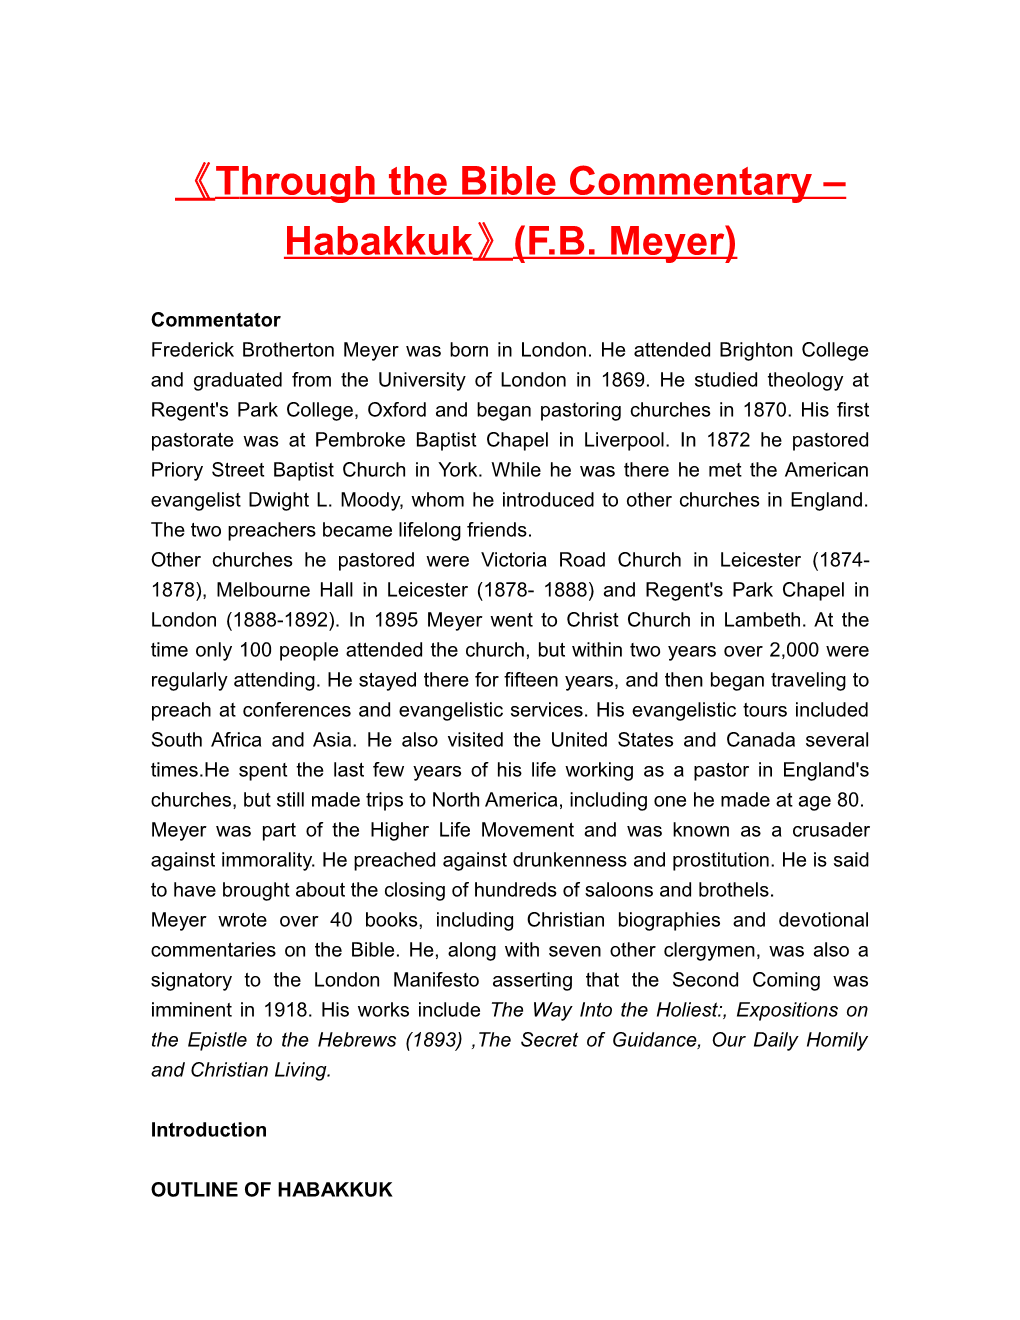 Through the Bible Commentary Habakkuk (F.B. Meyer)